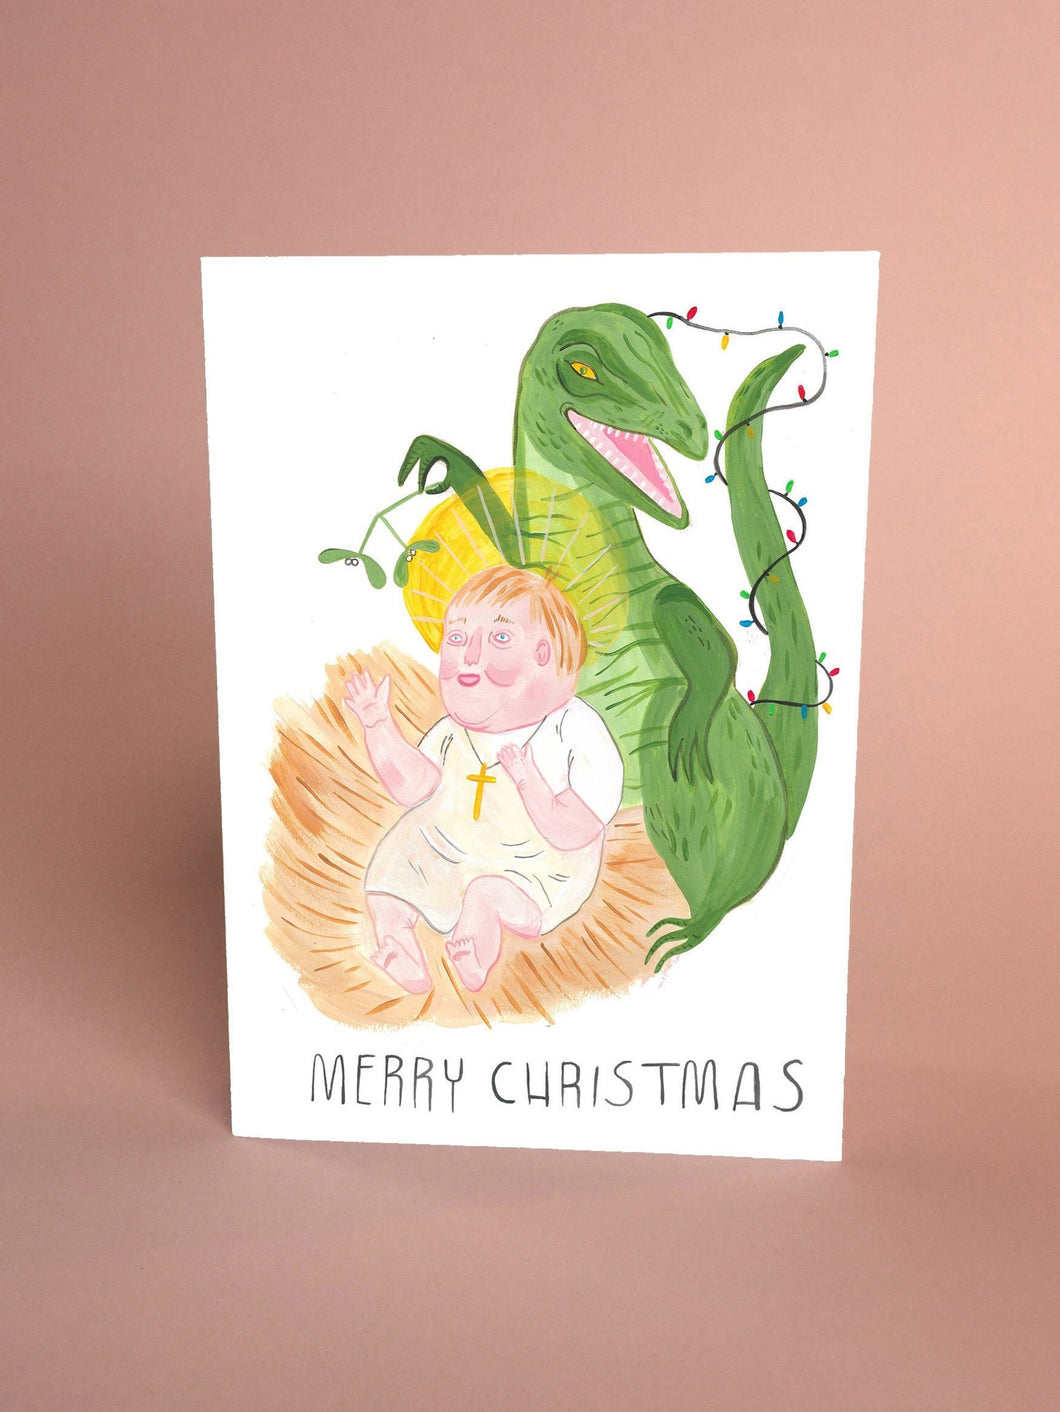 Merry Christmas Card - Jurassic Jesus - Dinosaur Painting, Illustrated Card, Mistletoe, Christmas Lights, Happy Holidays, Festive, Funny - Fernandes Makes